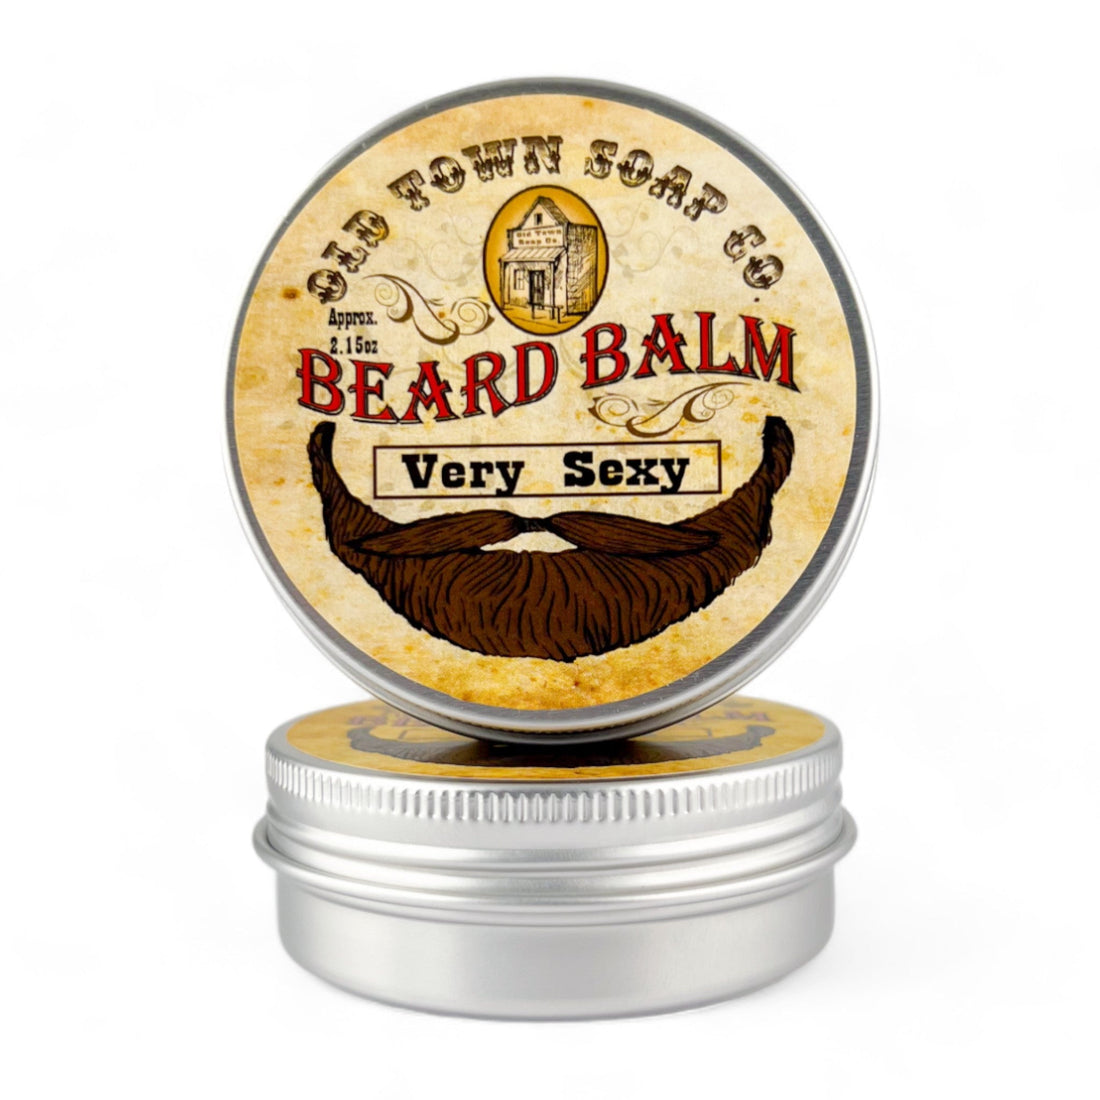 Very Sexy Beard Balm - Old Town Soap Co.